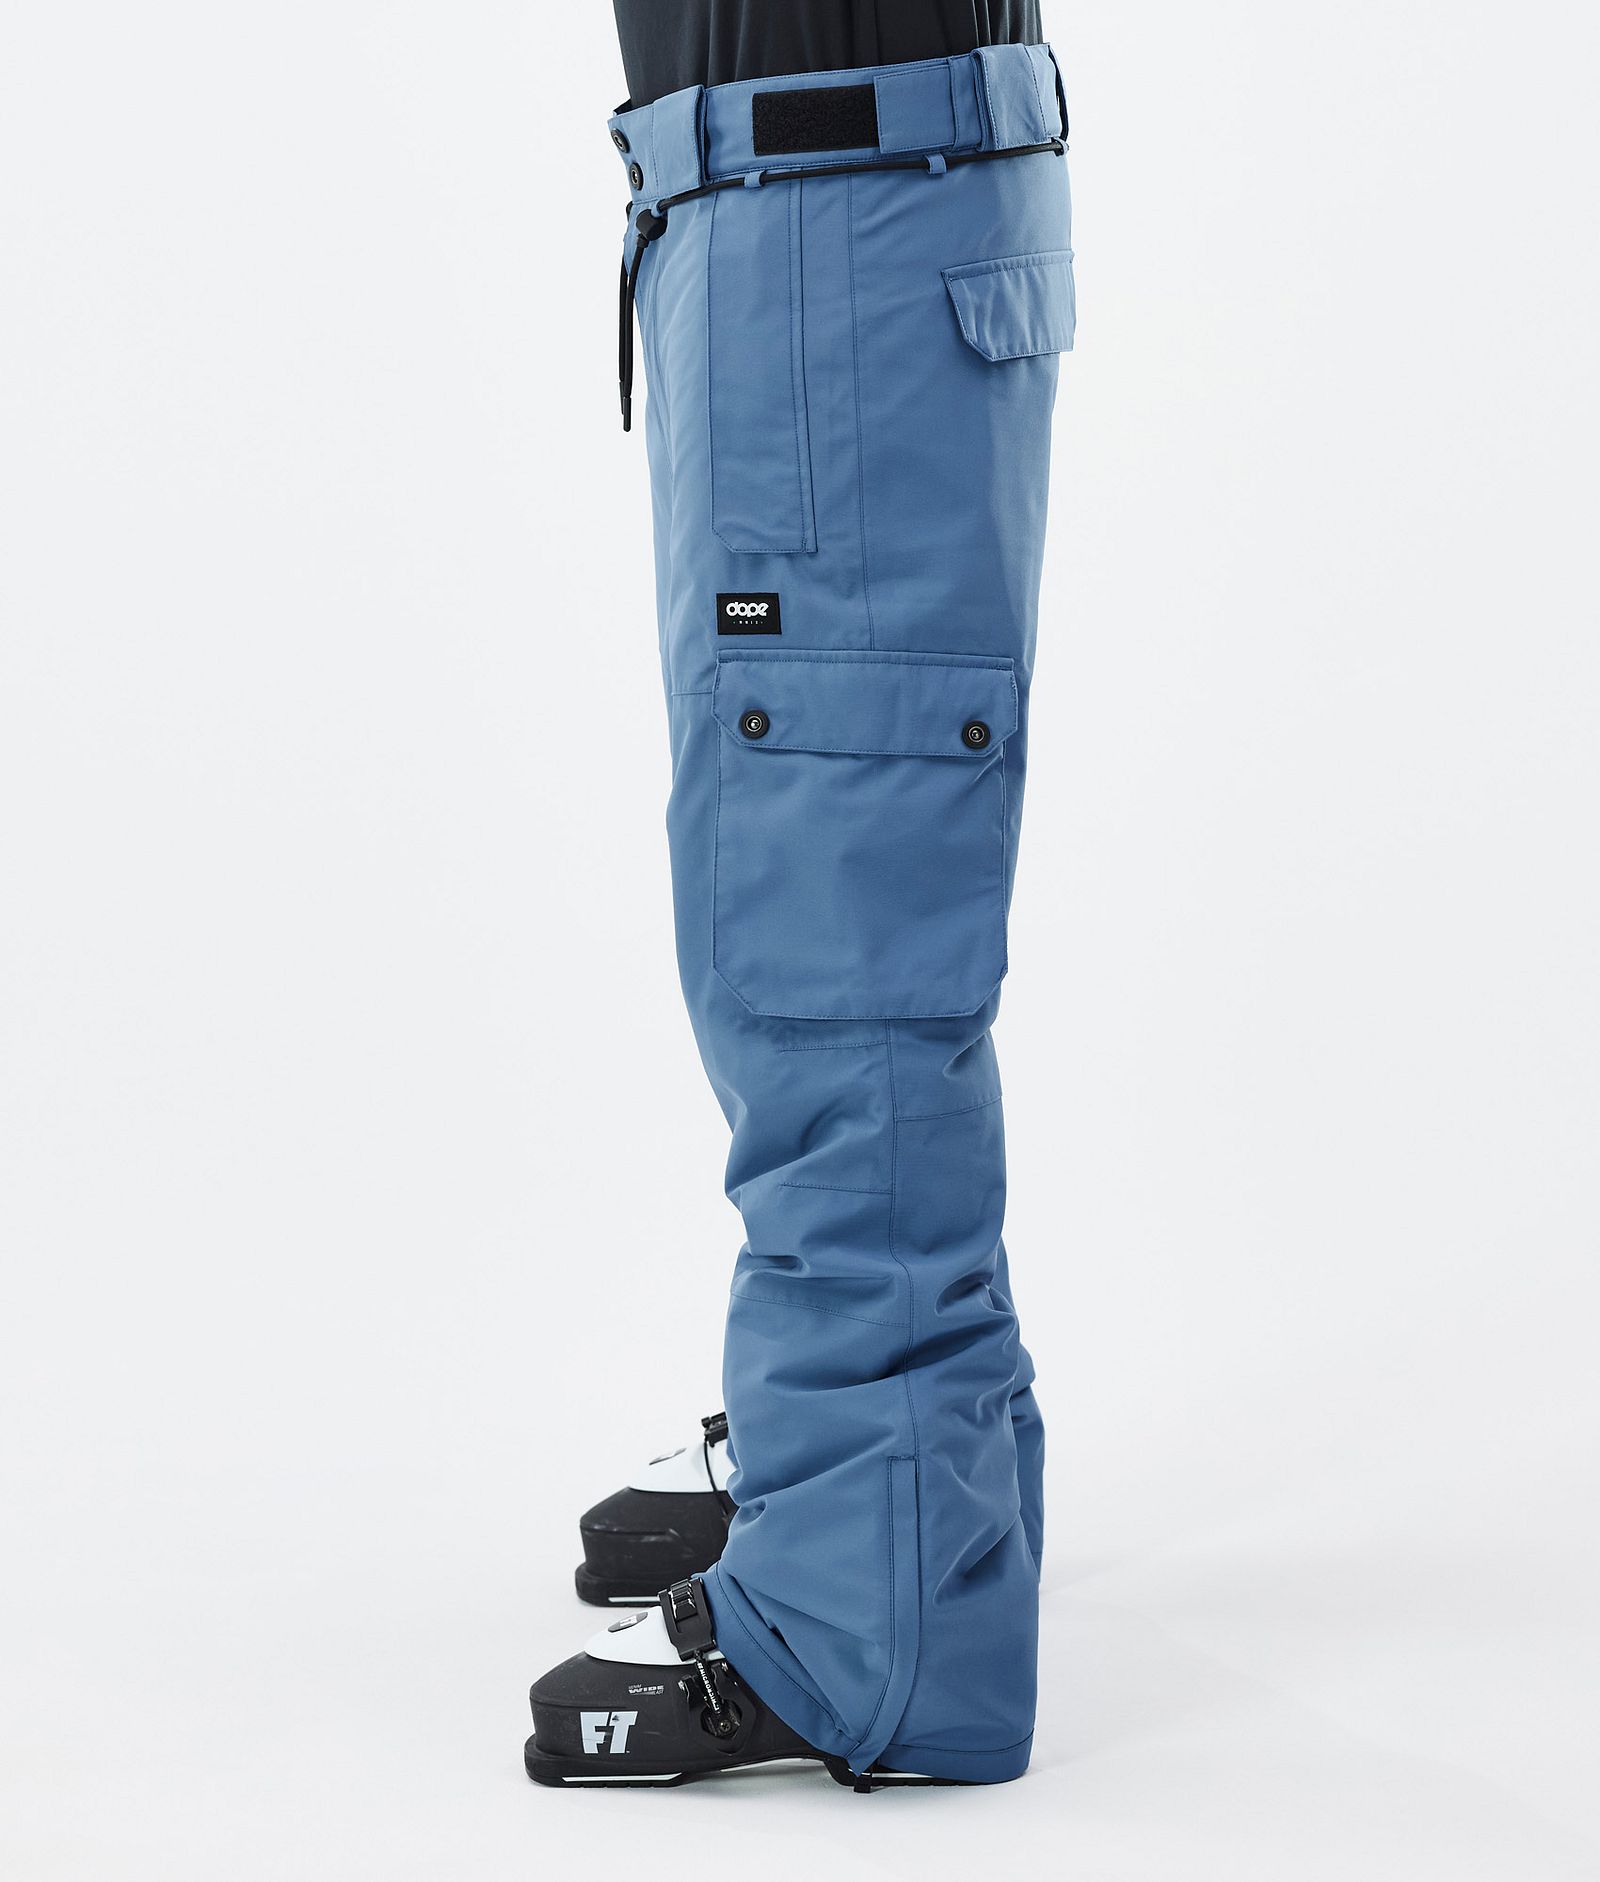 Iconic Pantalon de Ski Homme Blue Steel